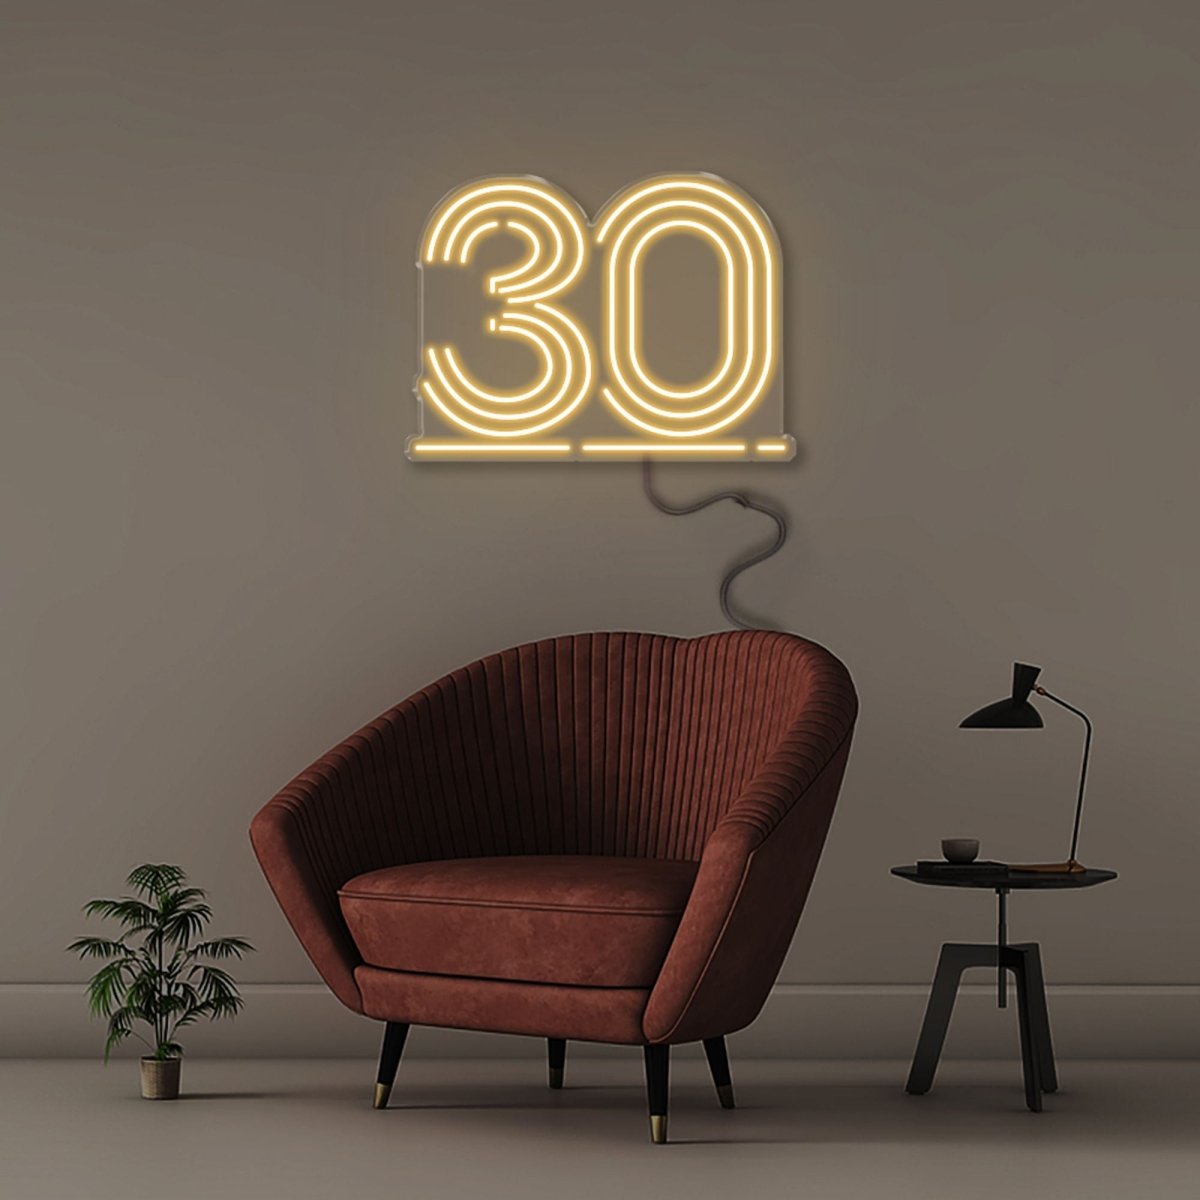 30 Birthday - Neonific - LED Neon Signs - 61cm (24") -